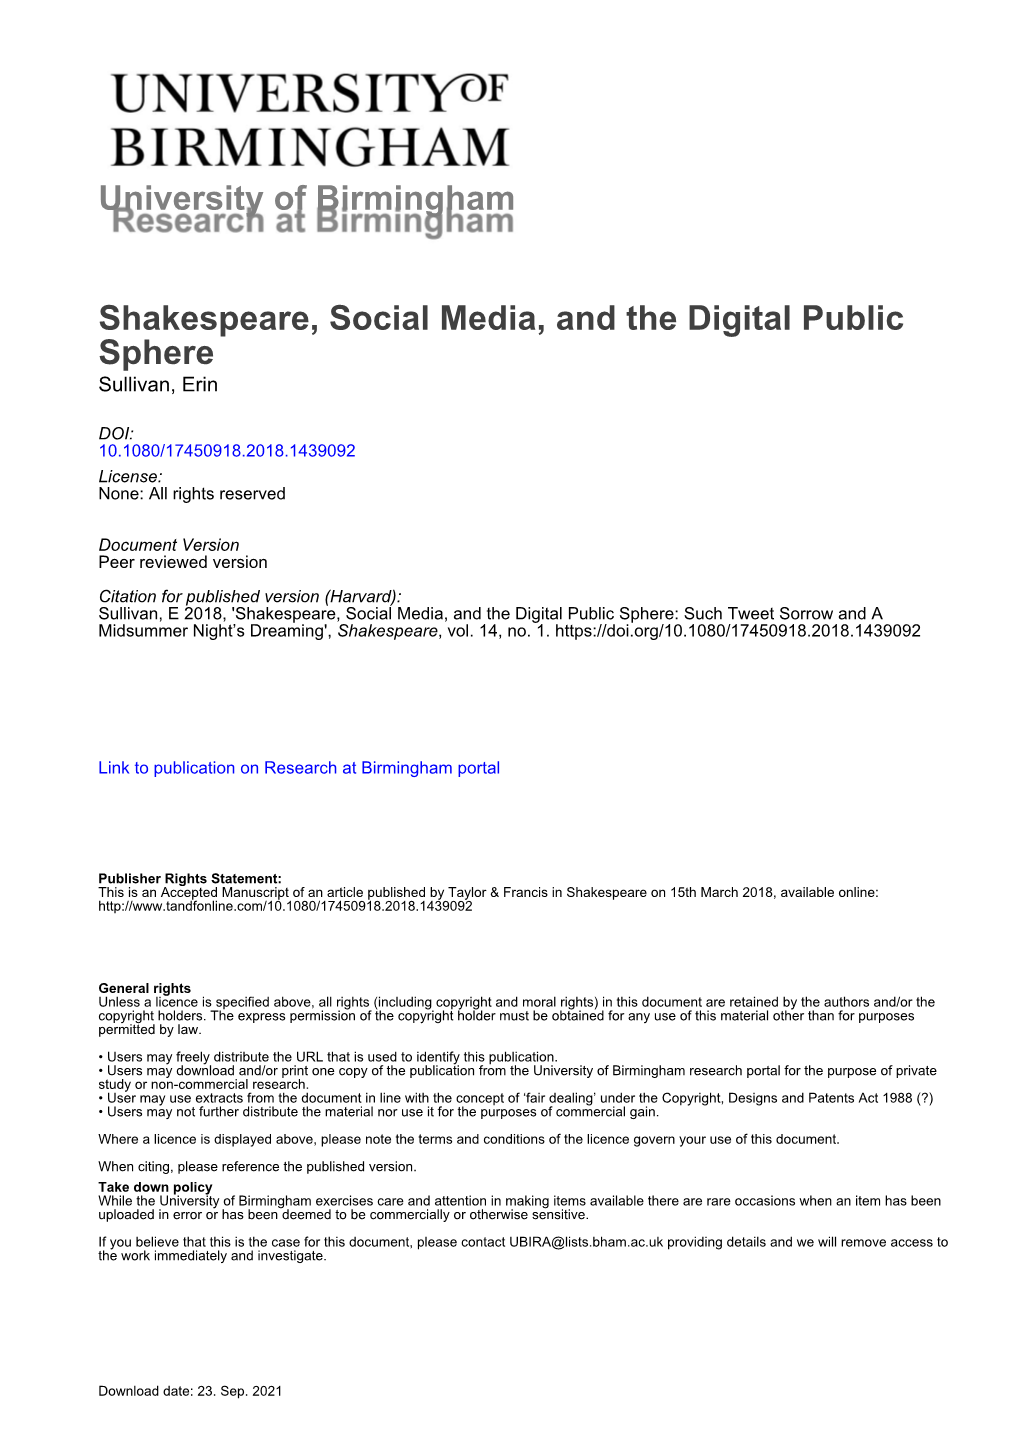 University of Birmingham Shakespeare, Social Media, And